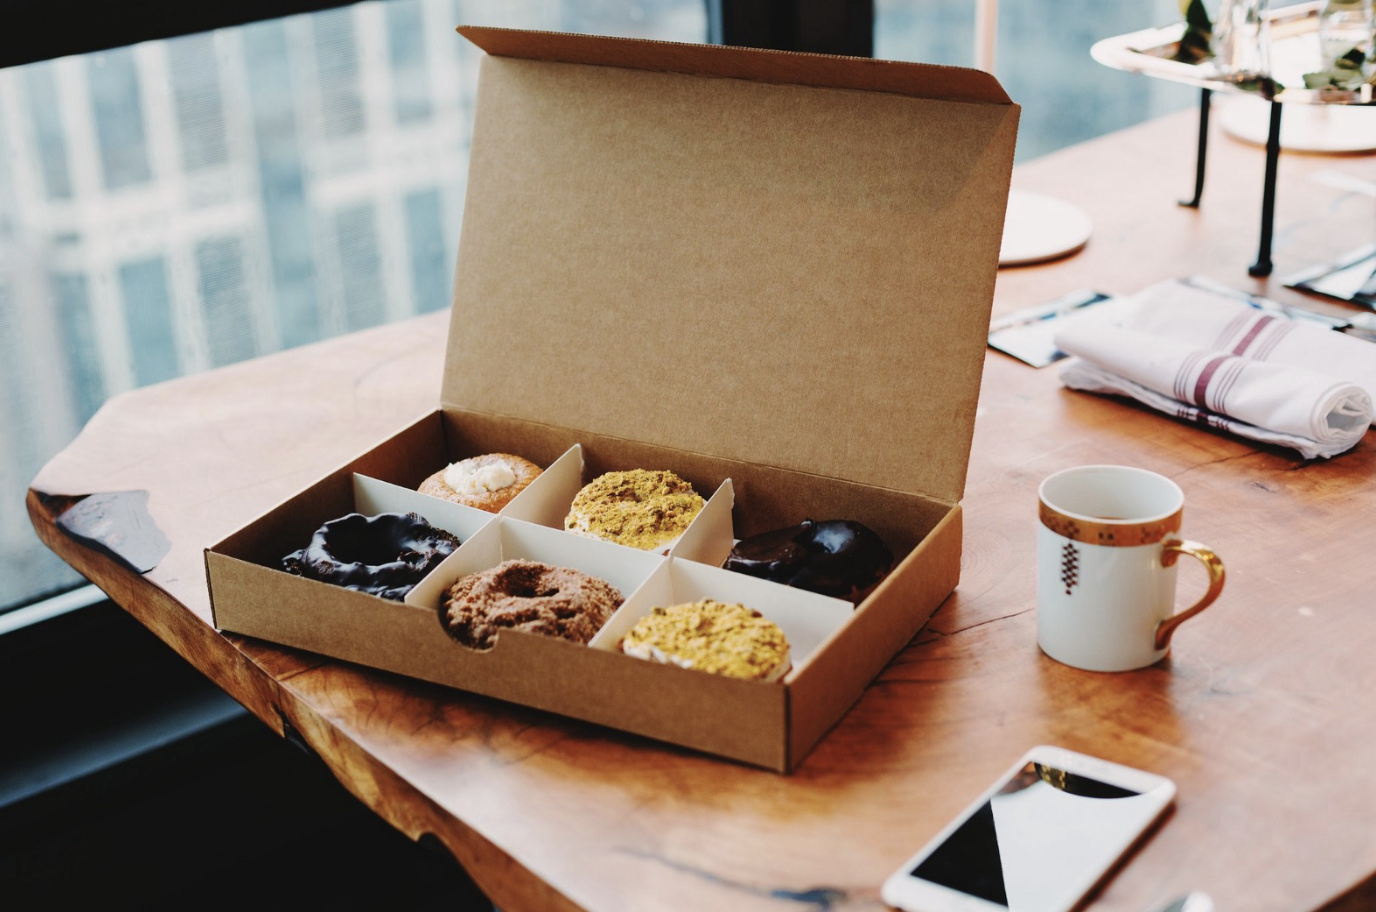 Beautiful presentation can enhance an already delicious donut.